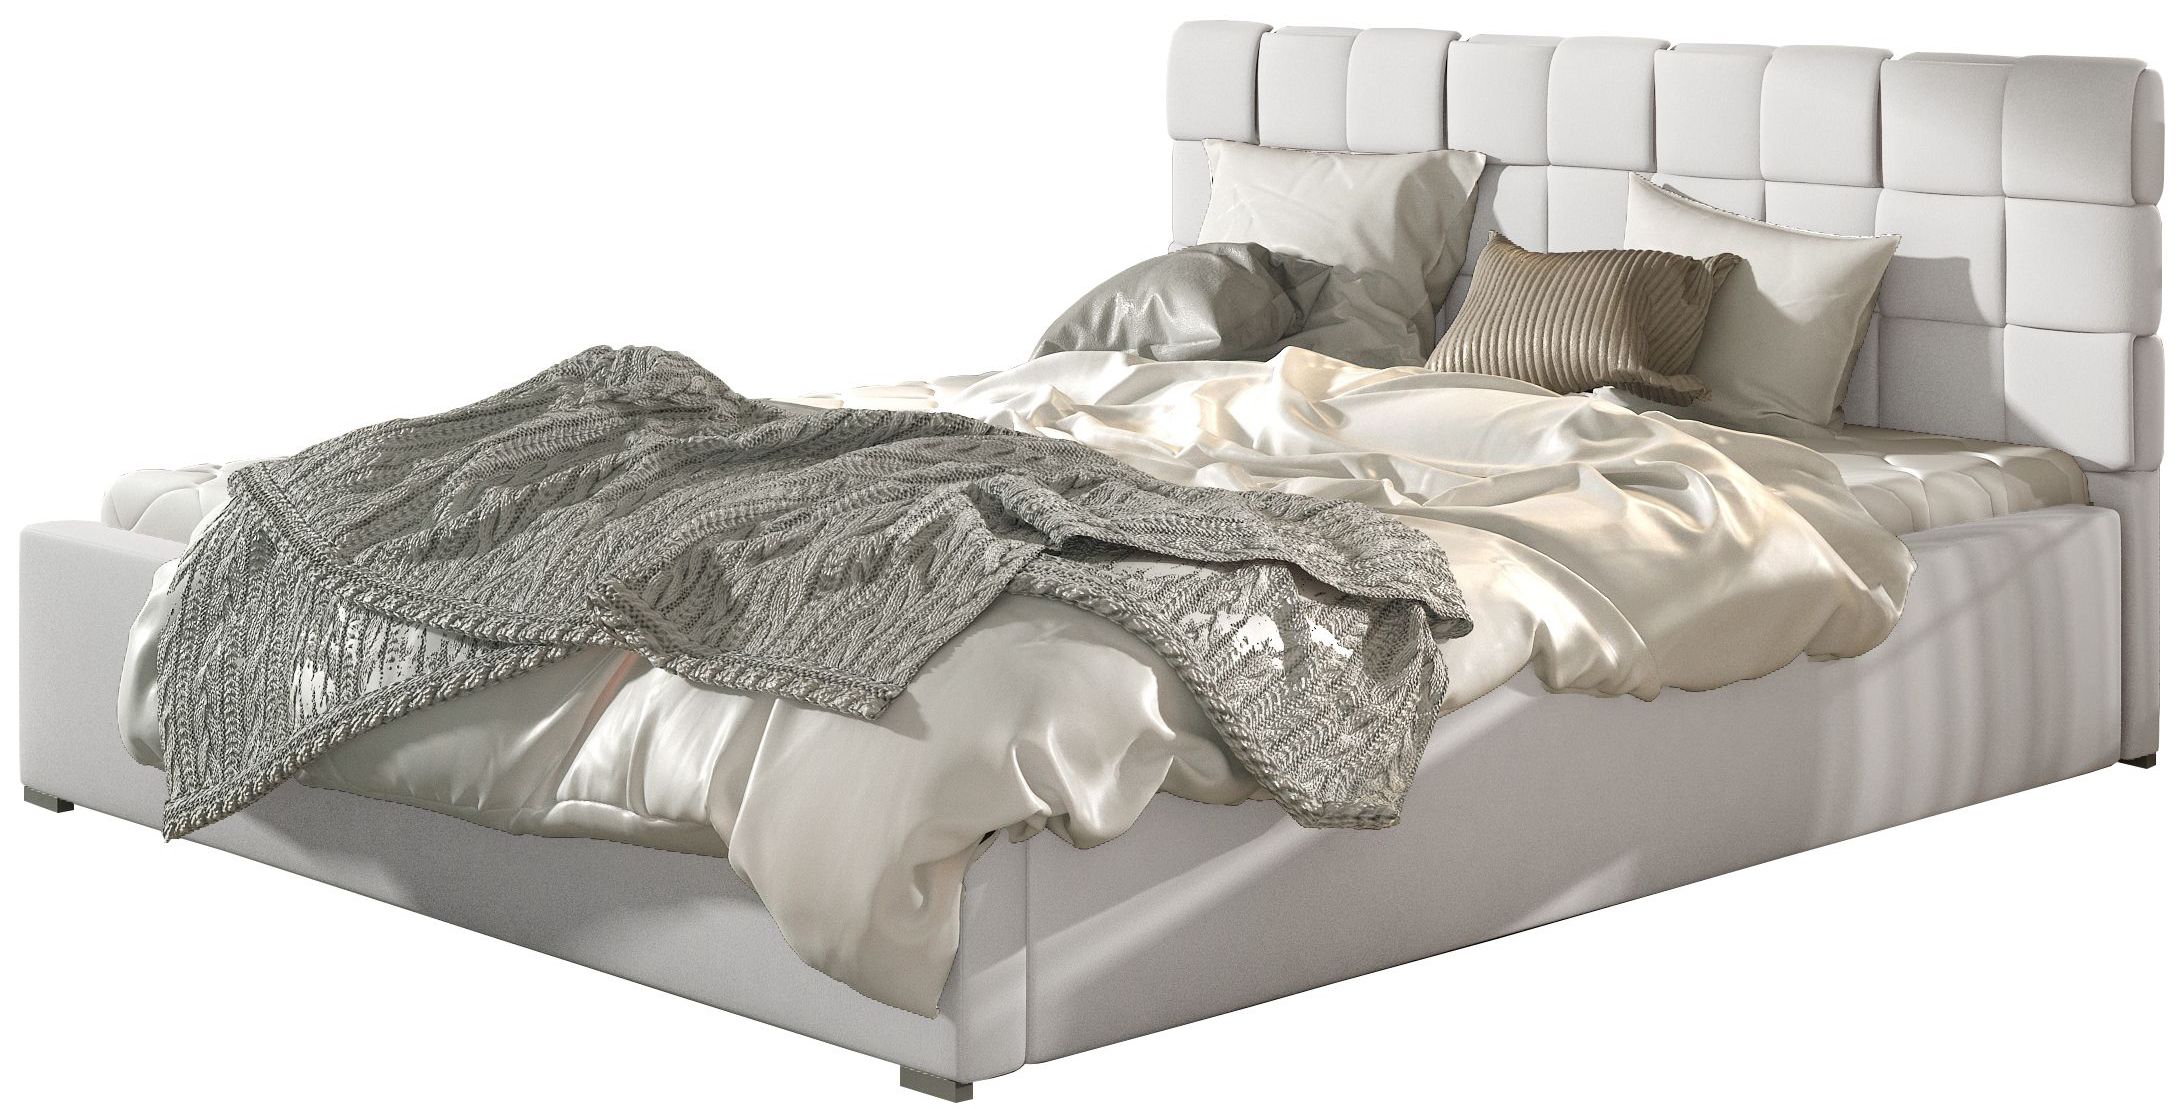 PoliHome Επενδυμένο κρεβάτι Grady-160 x 200-Χωρίς μηχανισμό ανύψωσης-Leuko